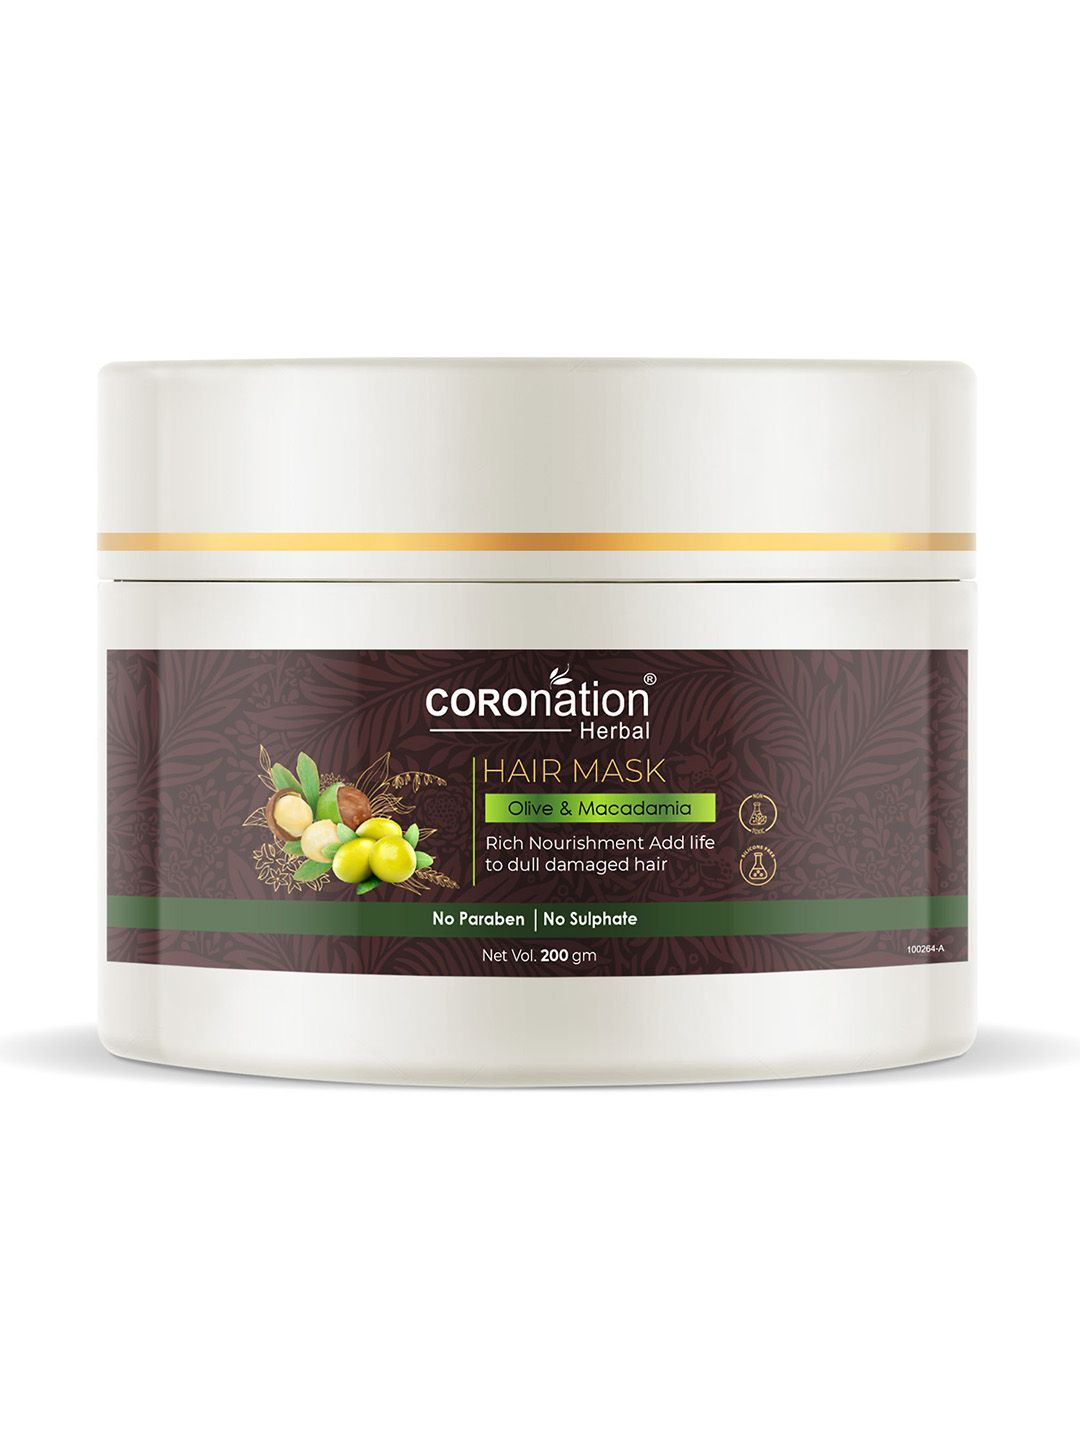 COROnation Herbal Olive & Macadamia Hair Mask 200 gm Price in India